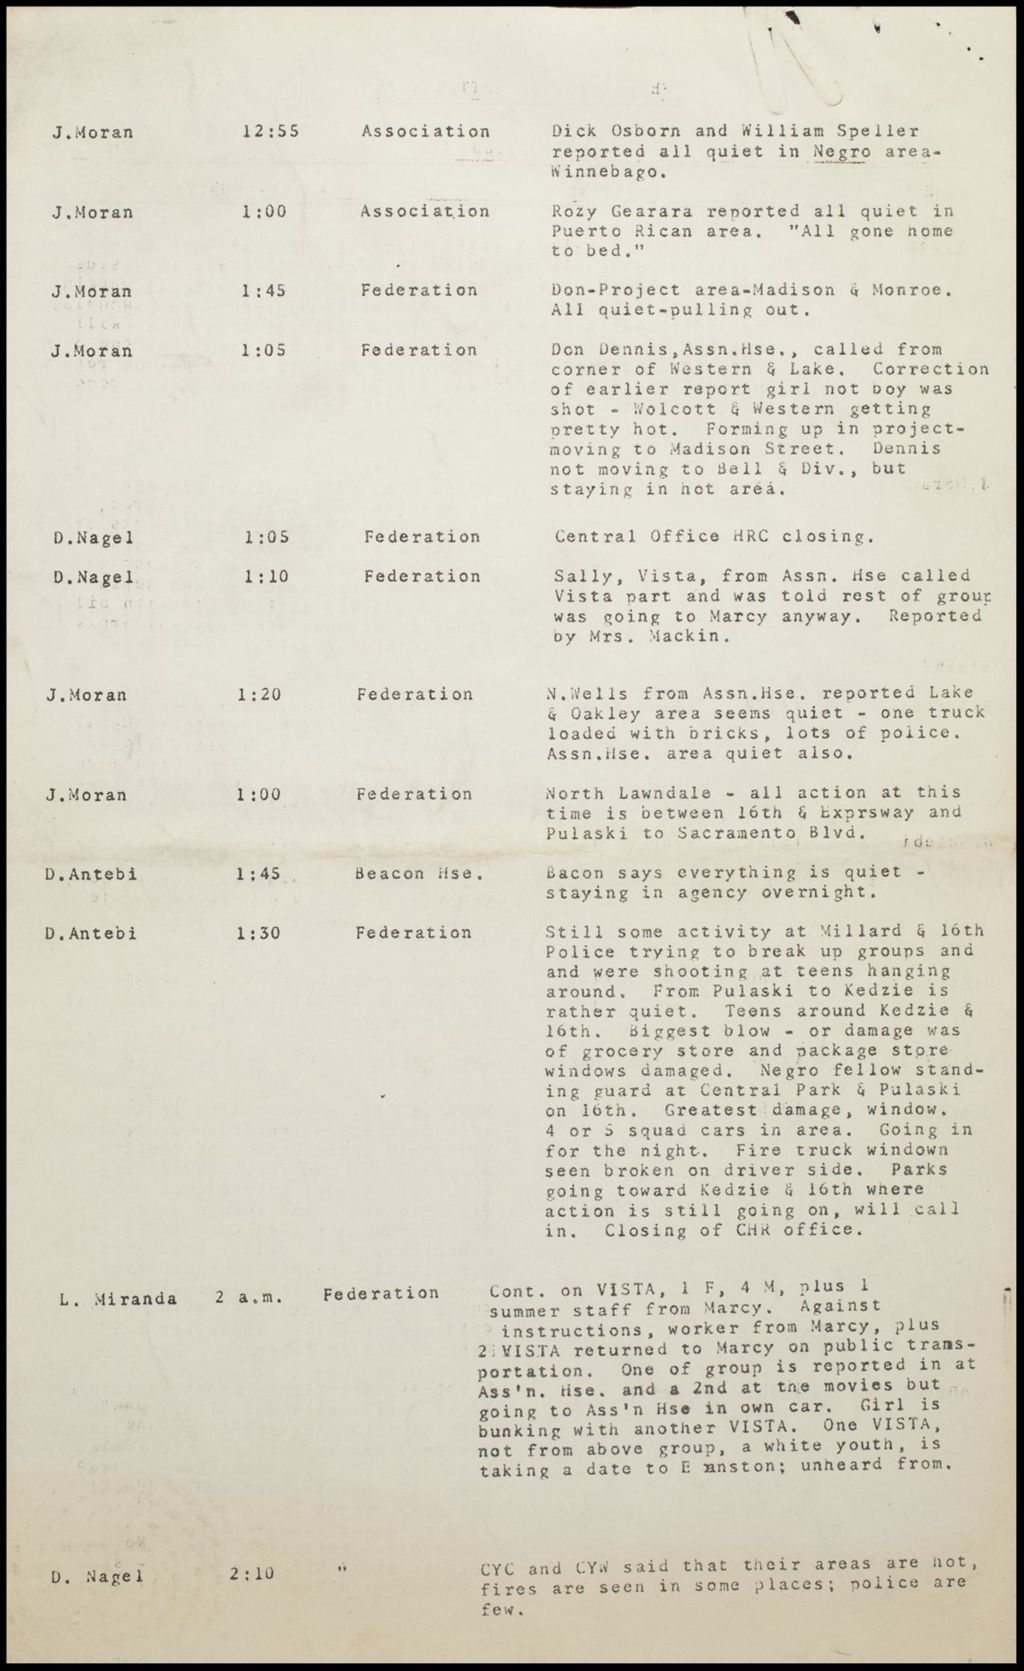 Miniature of Reports on Racial Violence, 1964-1968 (Folder III-1816)